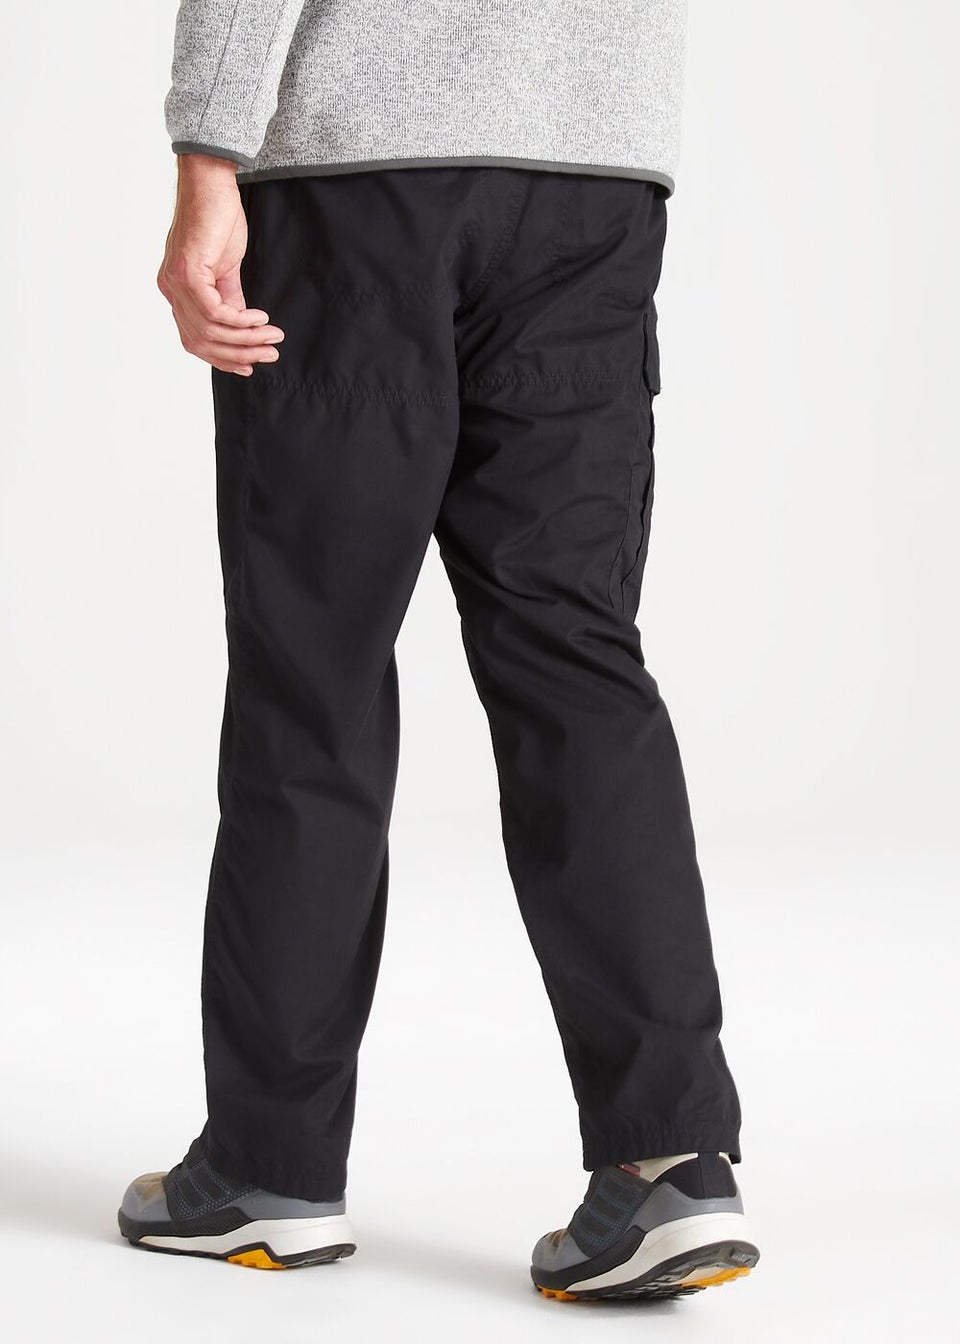 Craghoppers Men's Kiwi Pro Stretch Trousers, Black, 40in - S :  Amazon.co.uk: Fashion